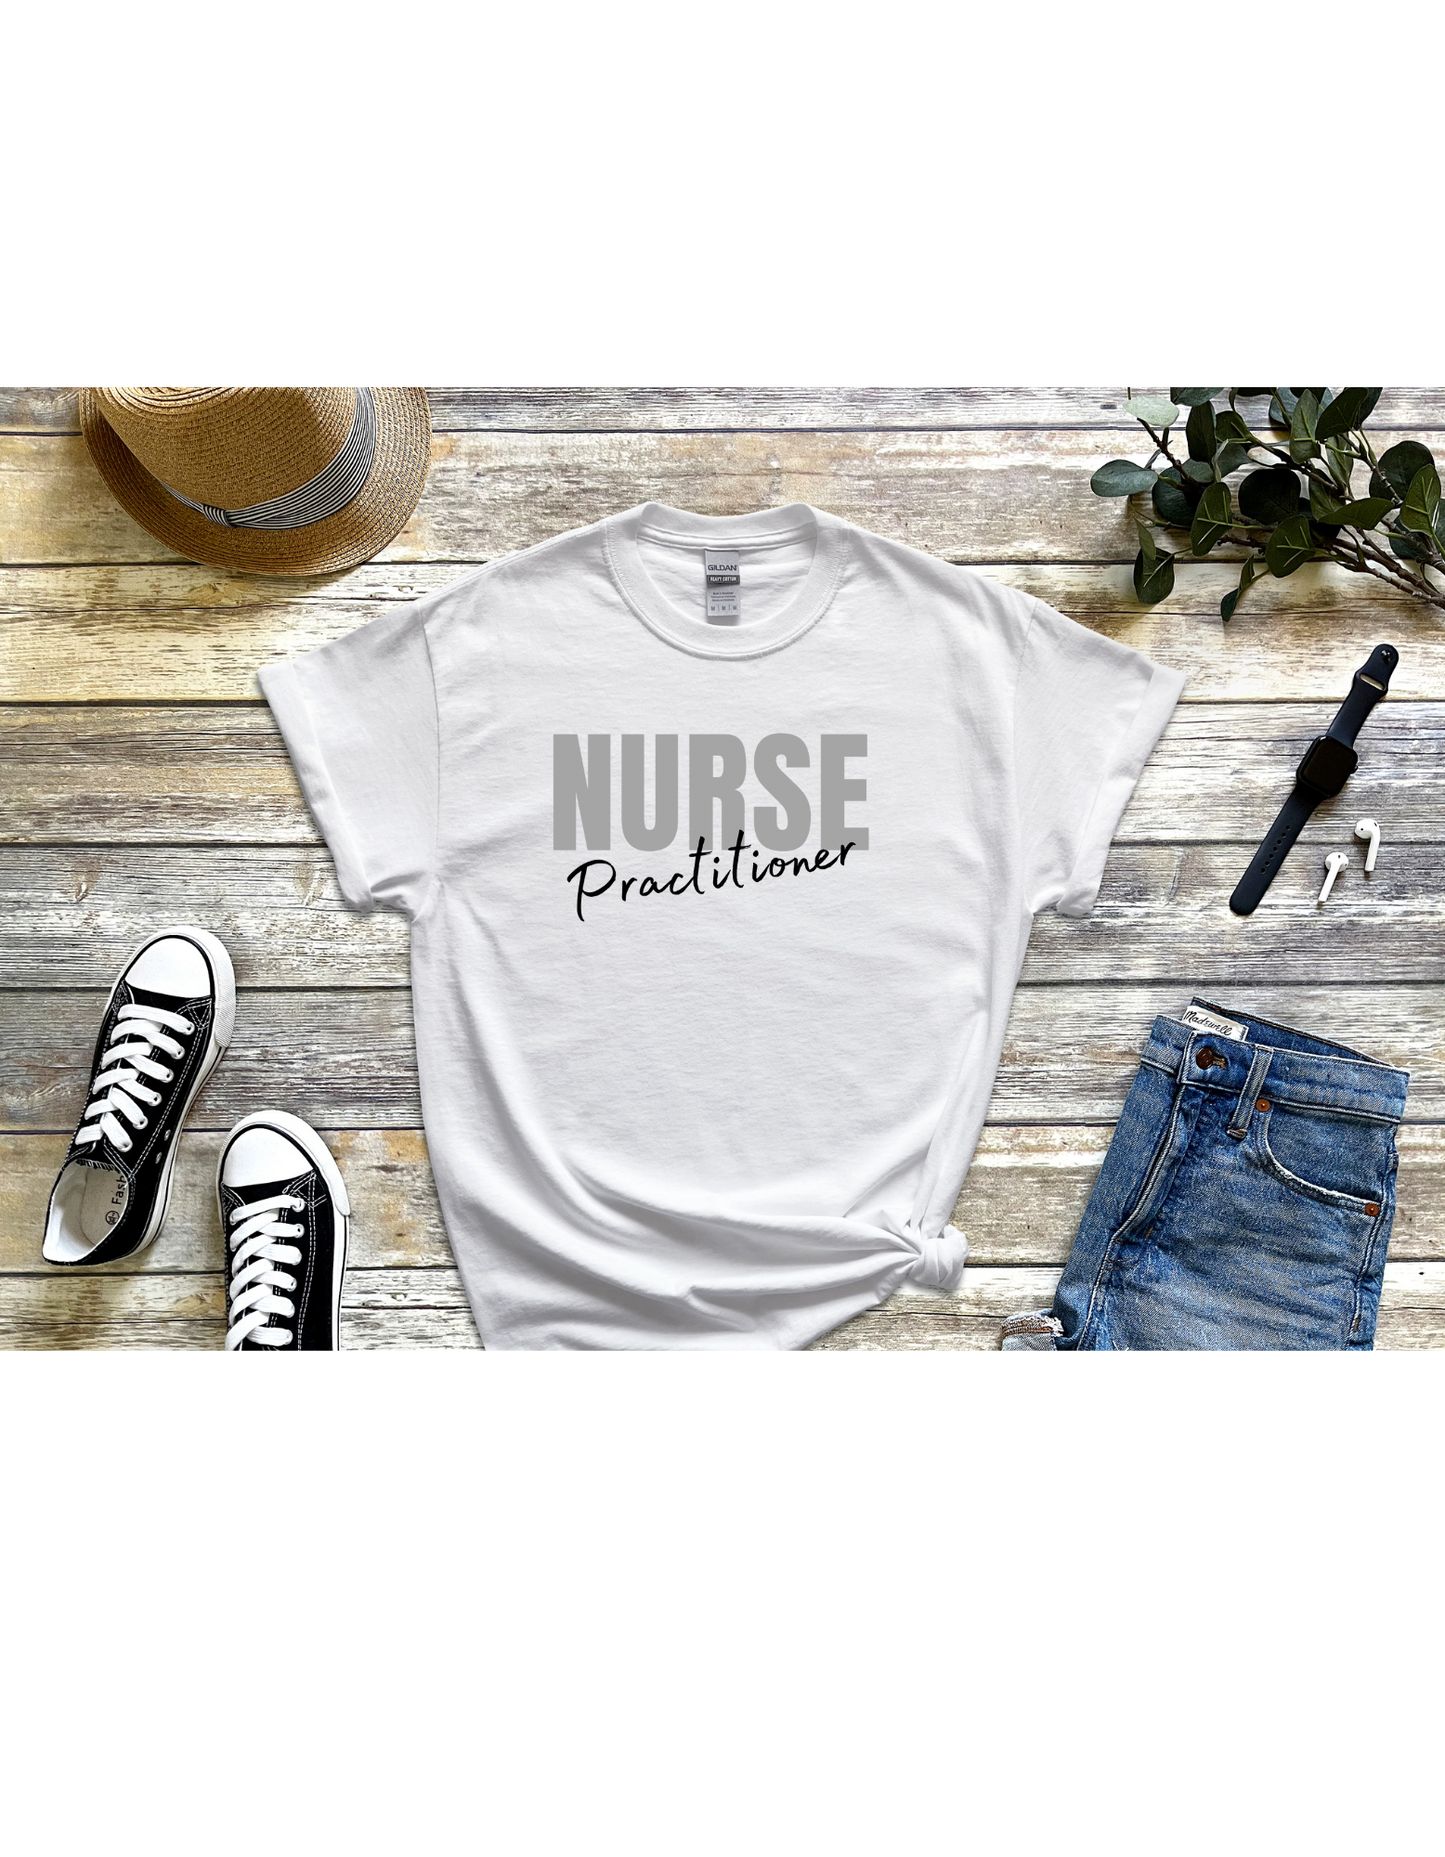 Nurse Practitioner Nursing T-Shirt, Healthcare Hero Shirt, NP Tee